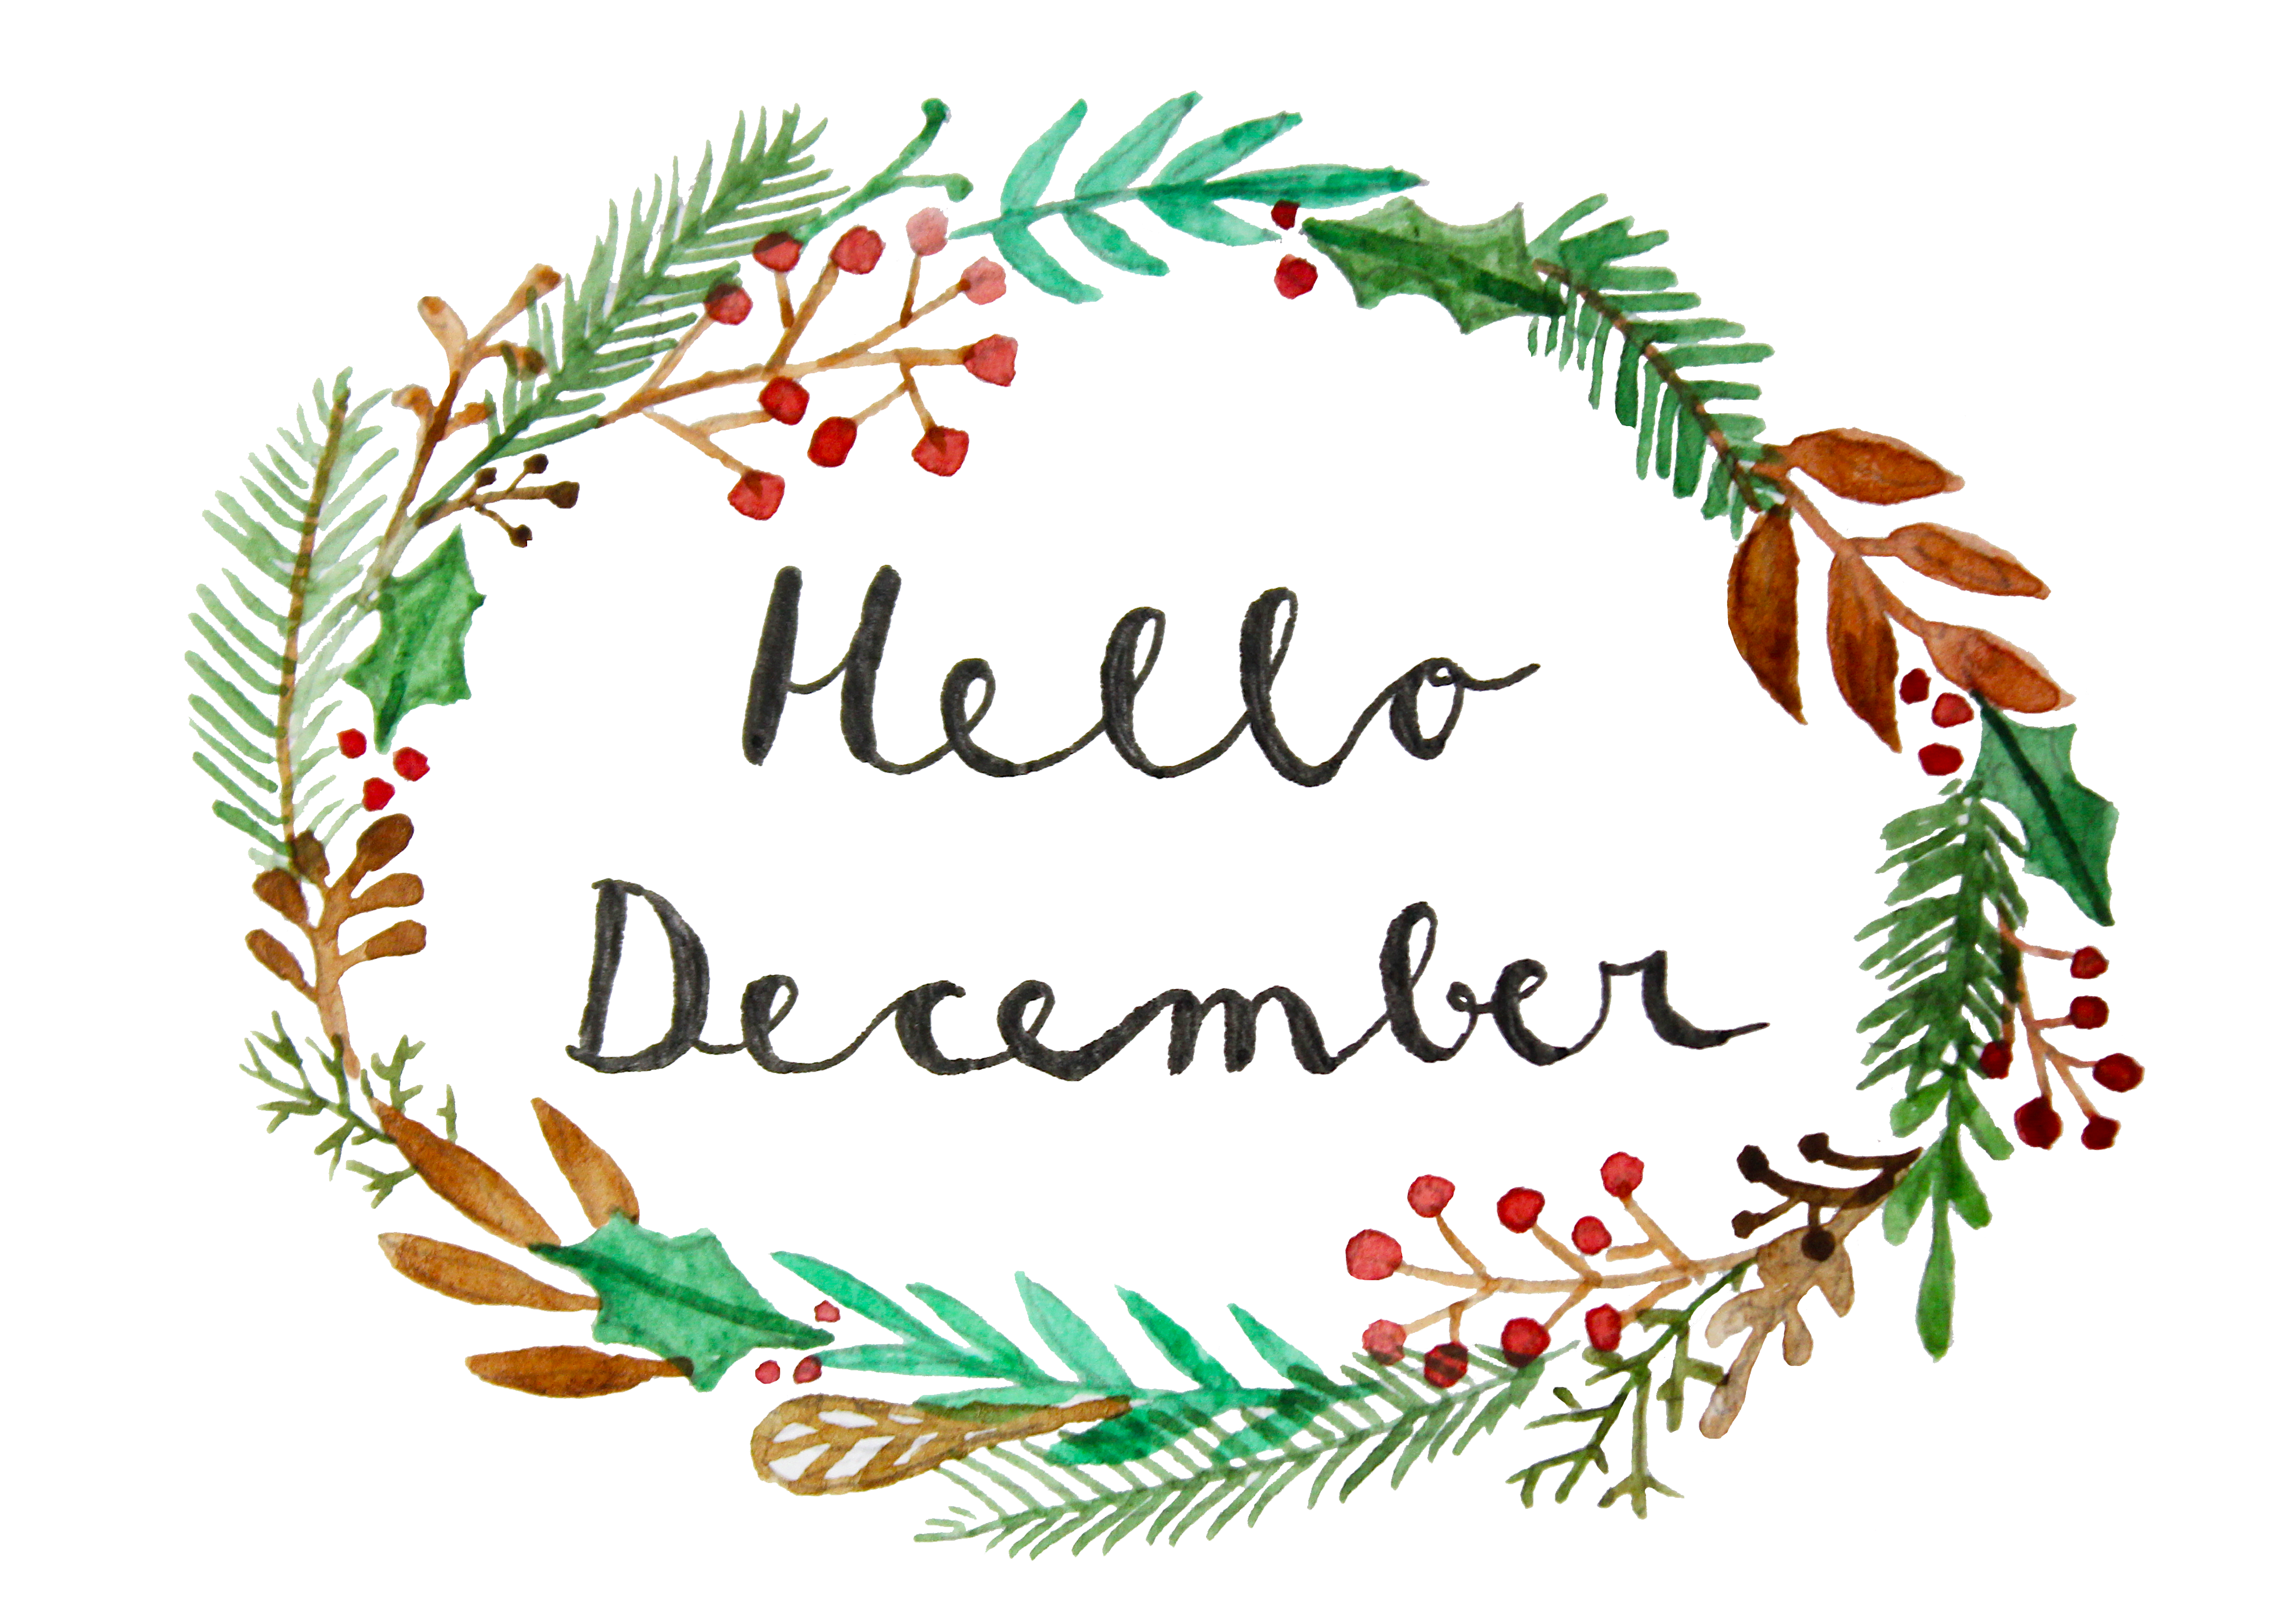 Oh Hello December!